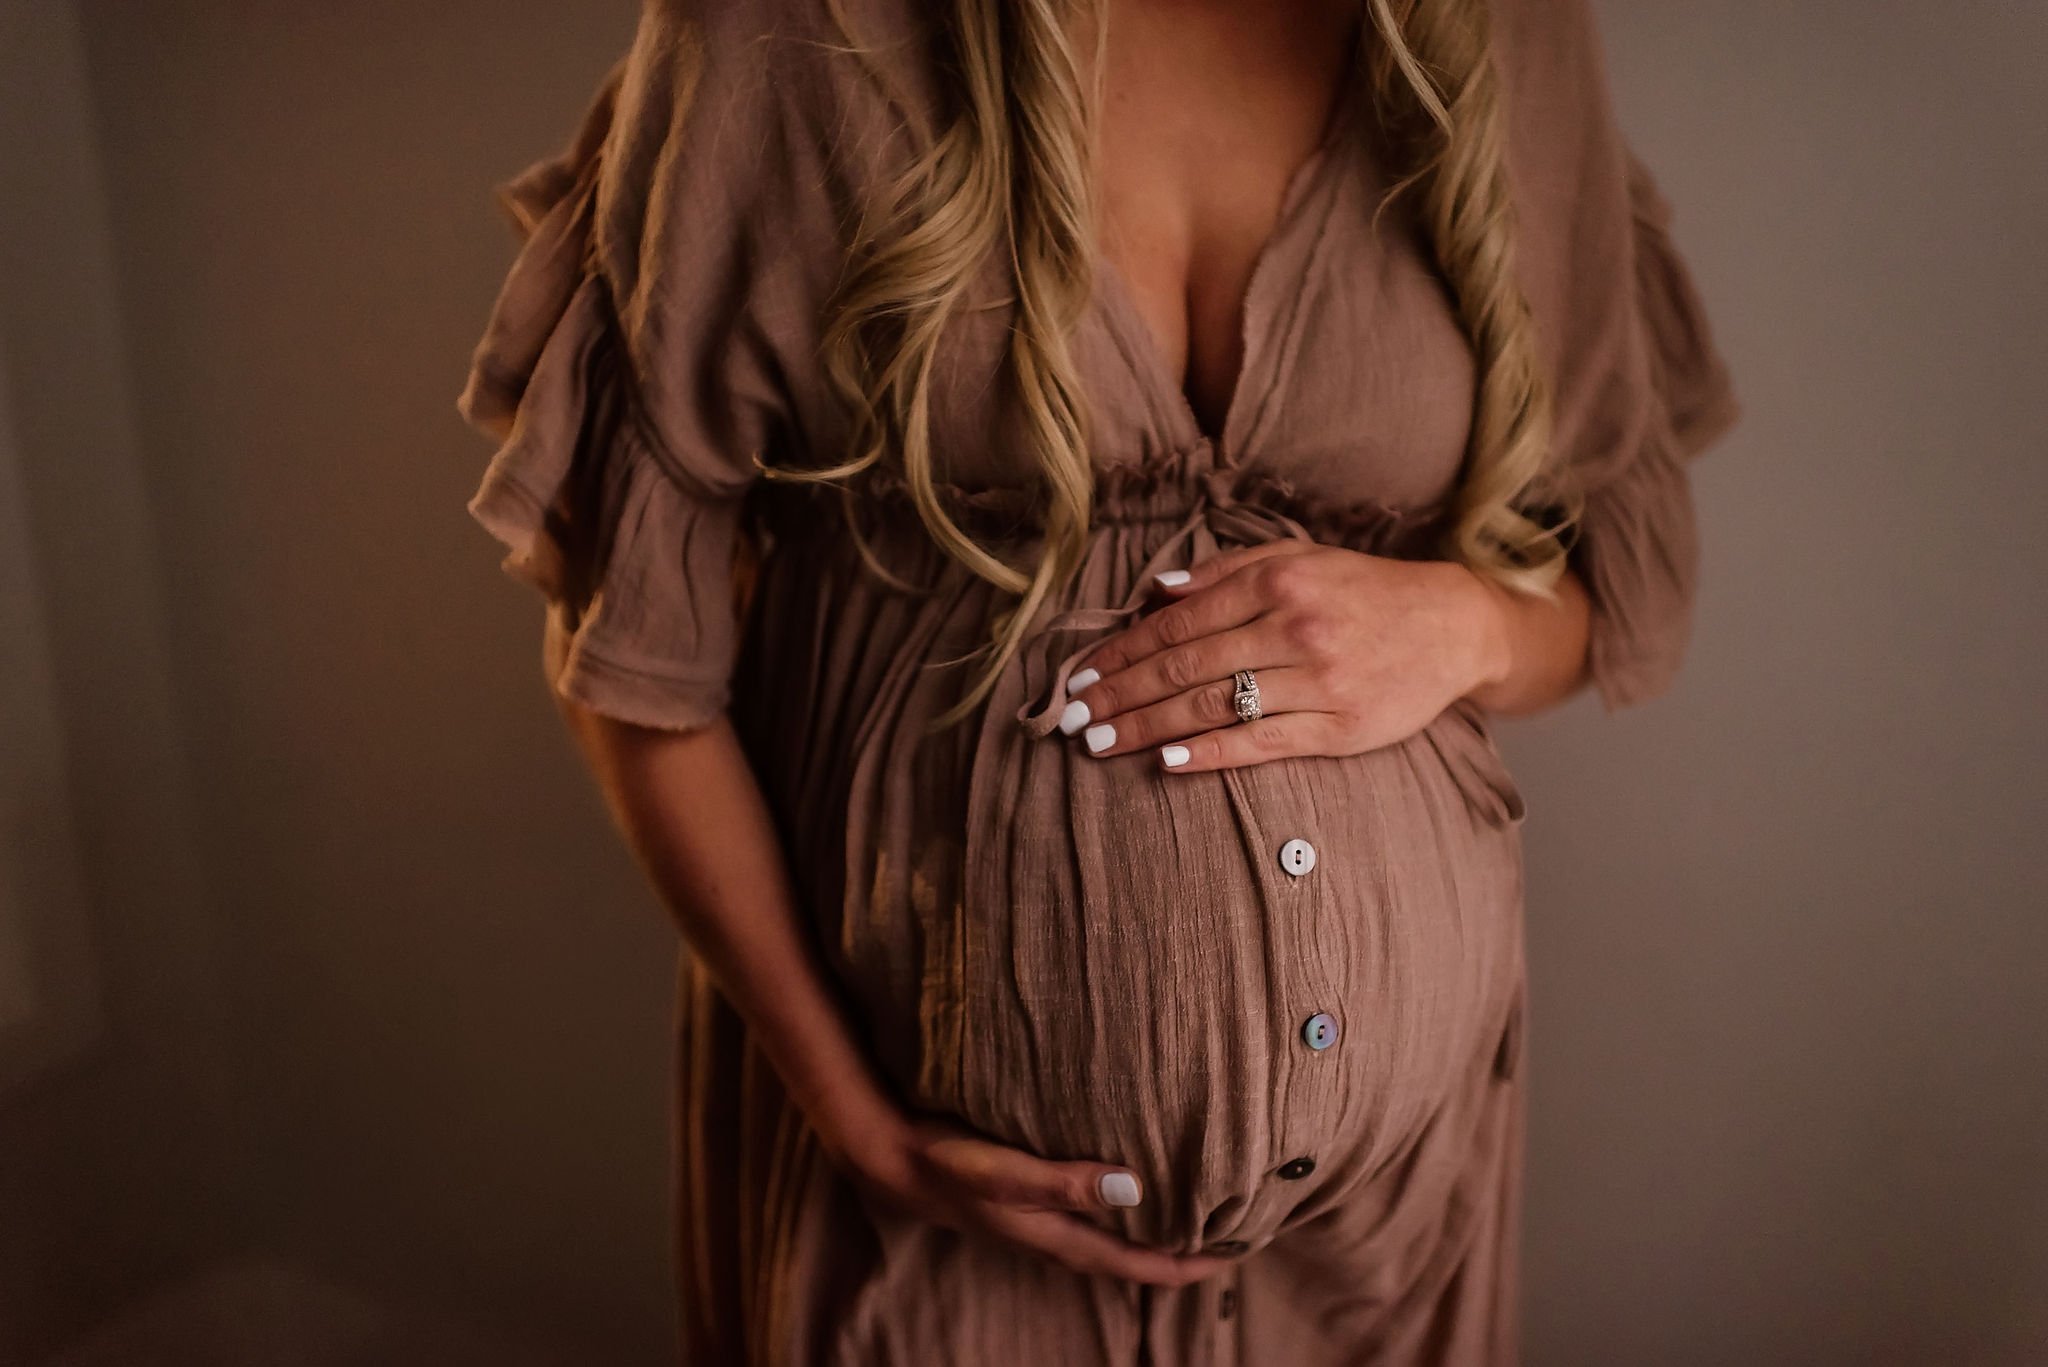 medina-ohio-studio-maternity-photography-family-session-12.jpeg